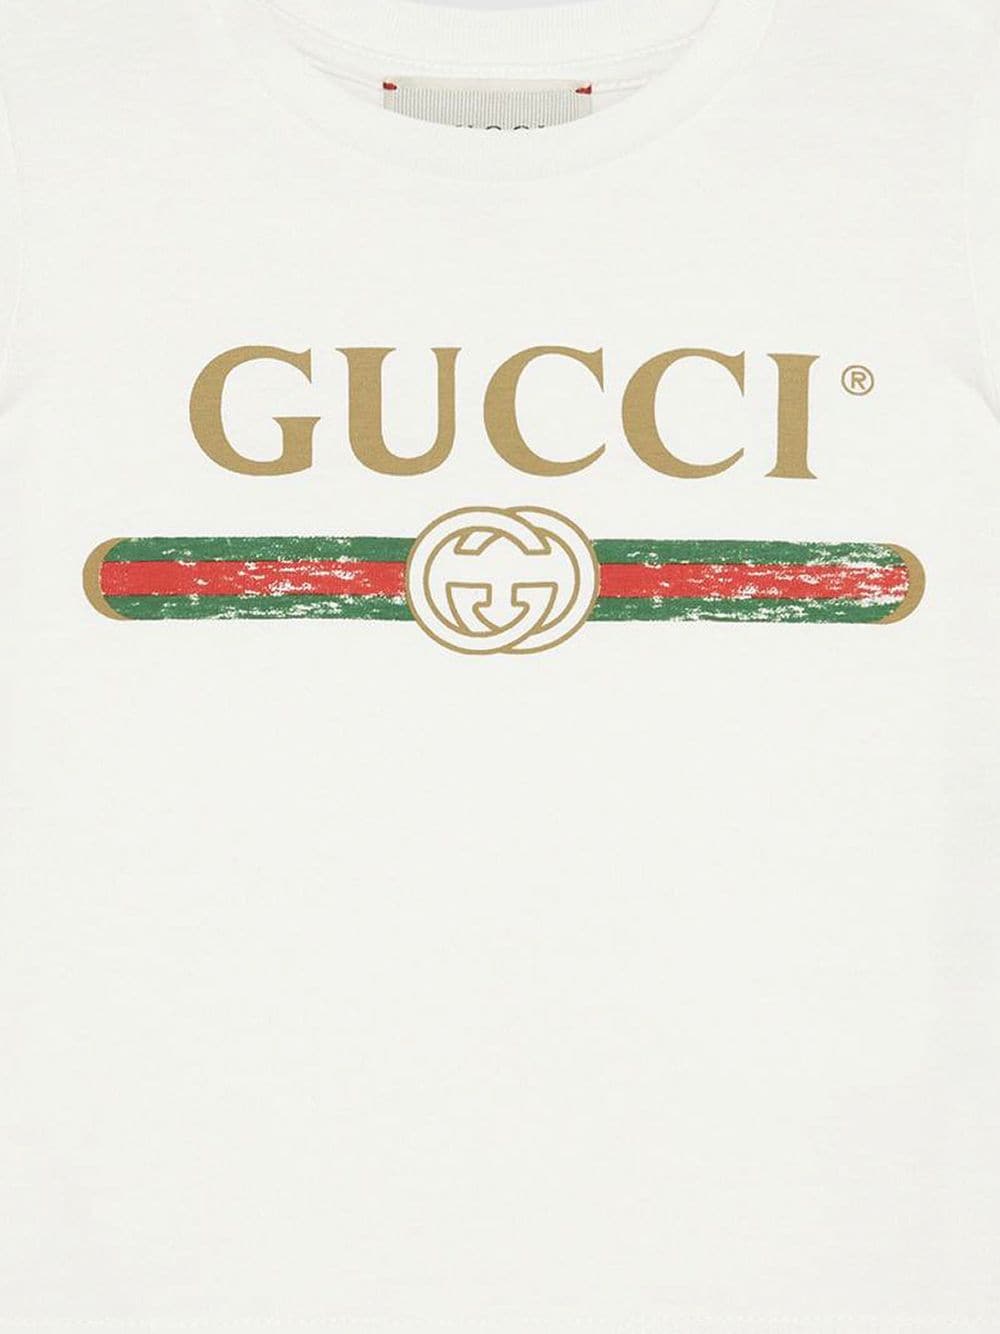 Gucci Kids t-shirt con logo